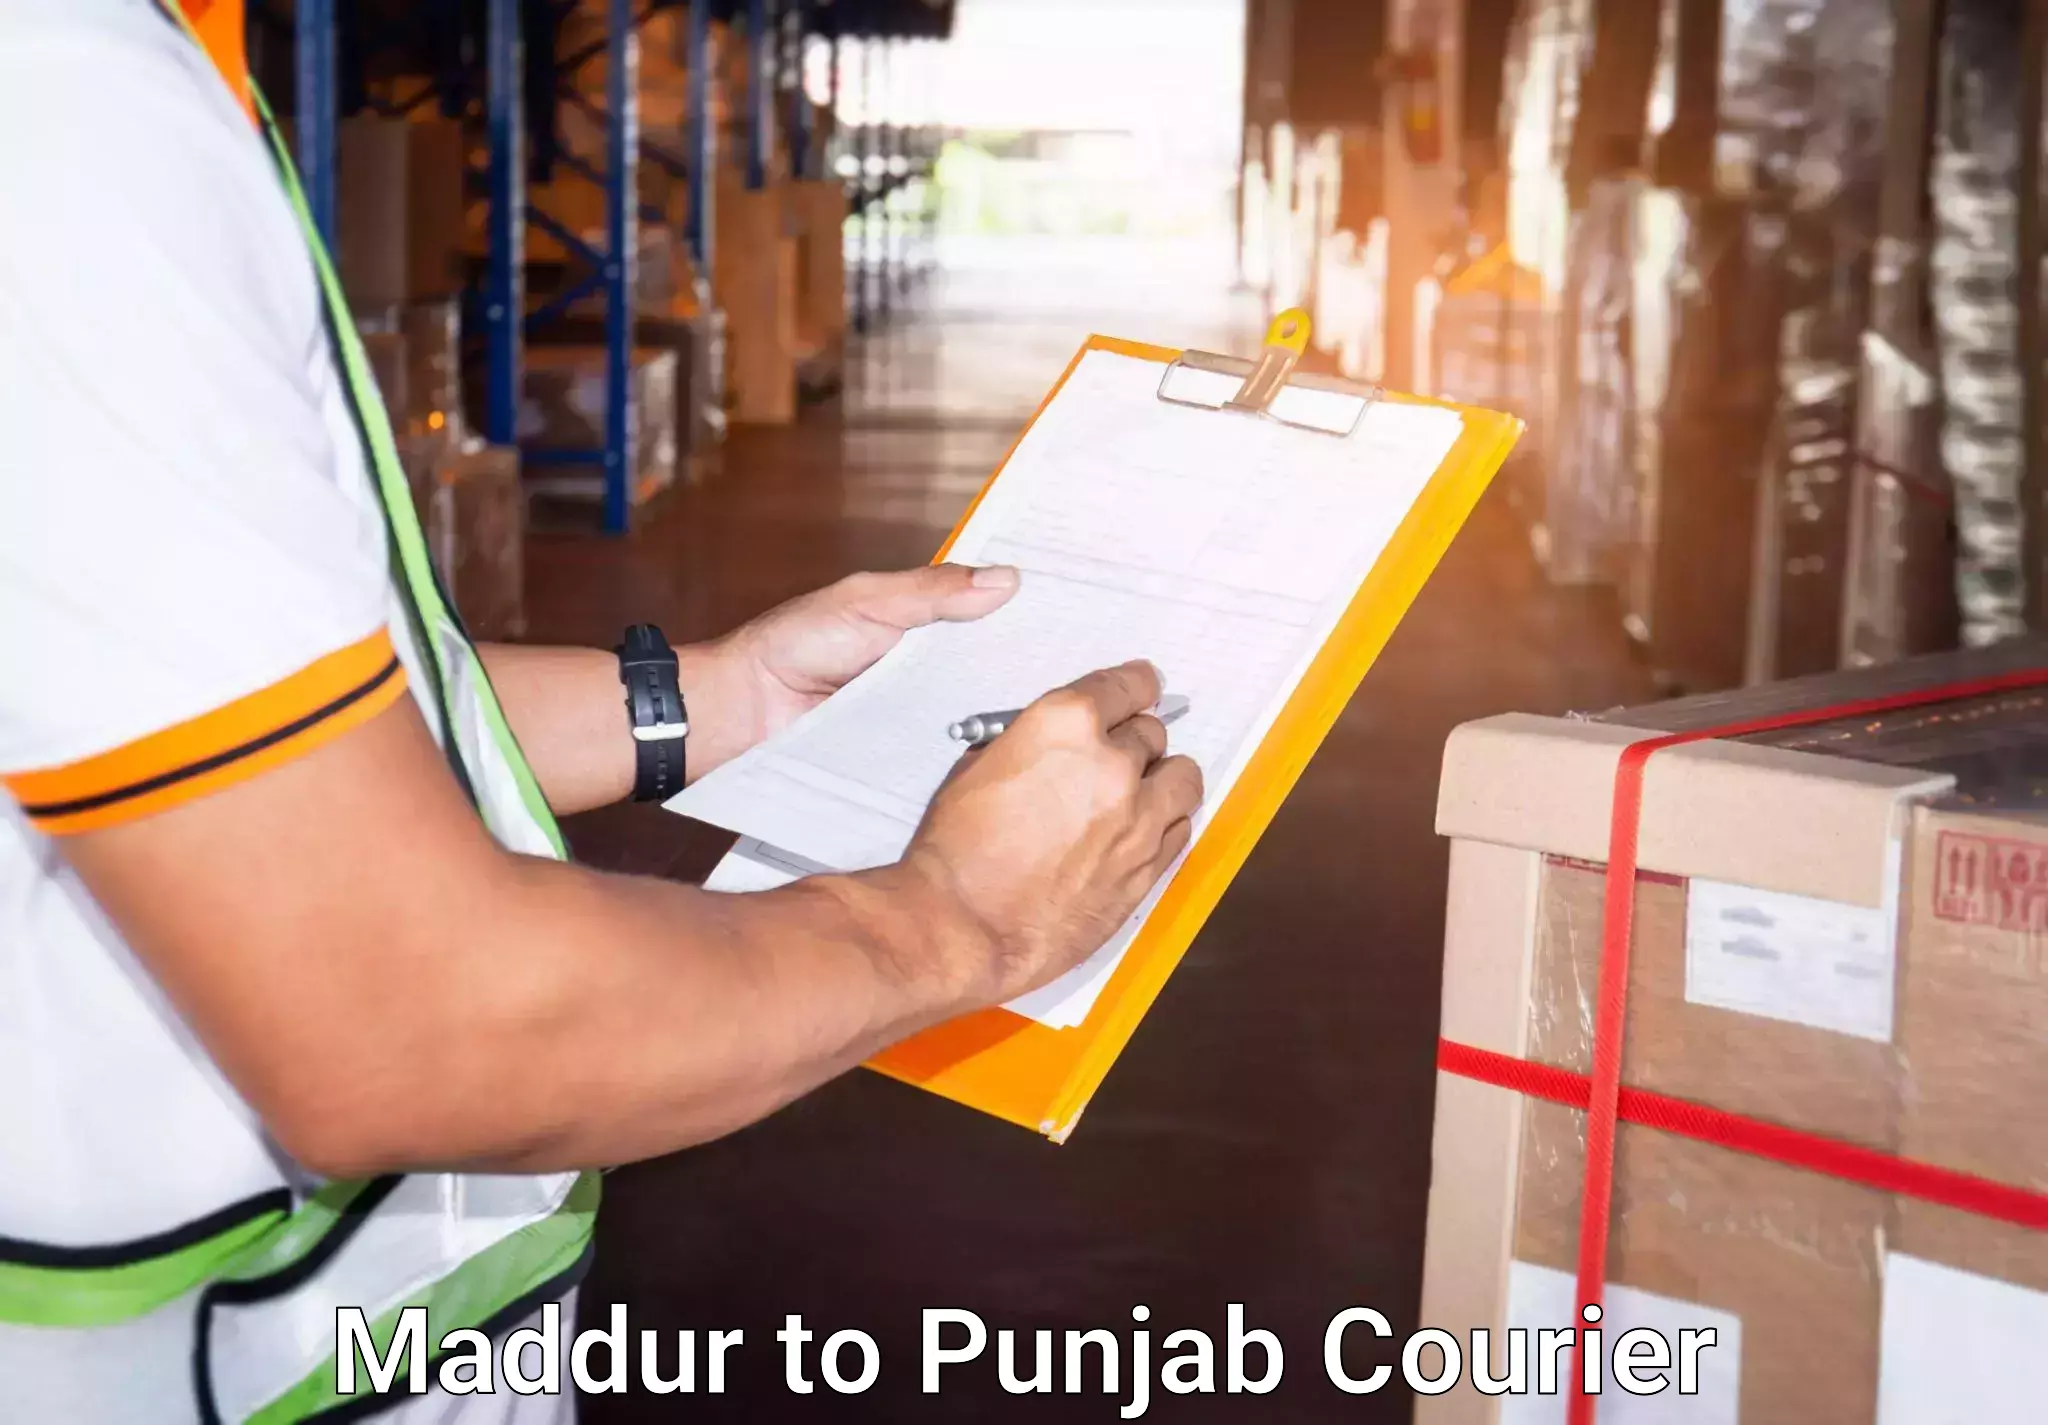 Emergency baggage service Maddur to Punjab